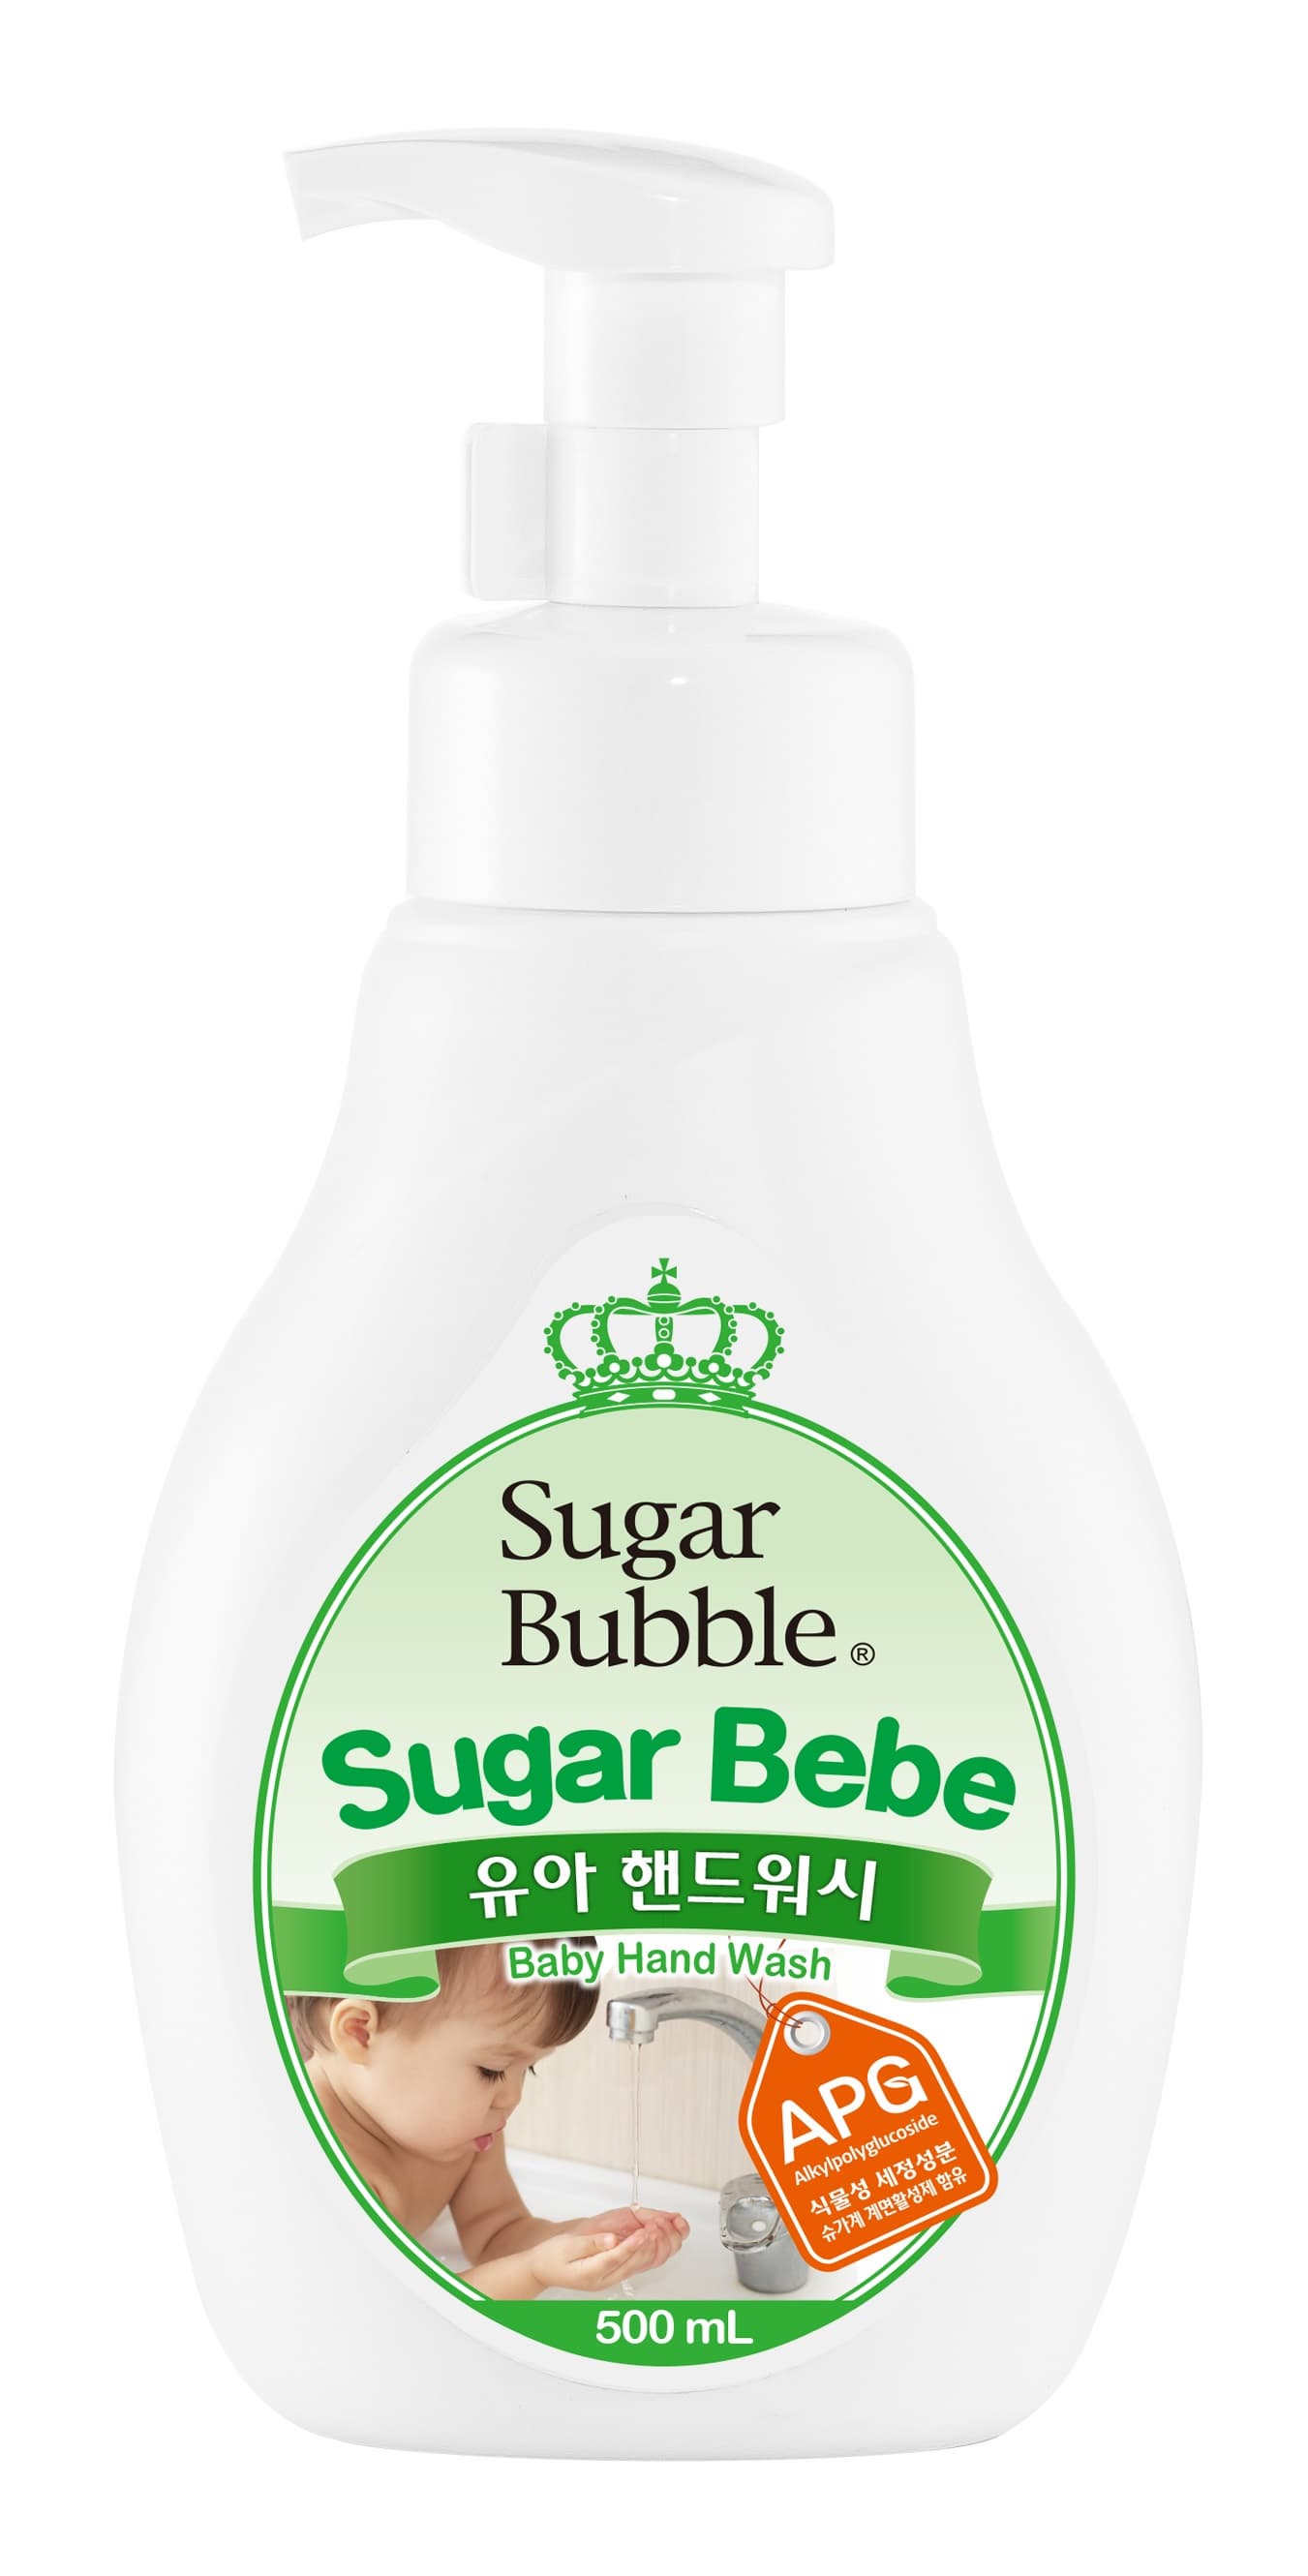 Sugar Bubble Baby Hand Wash